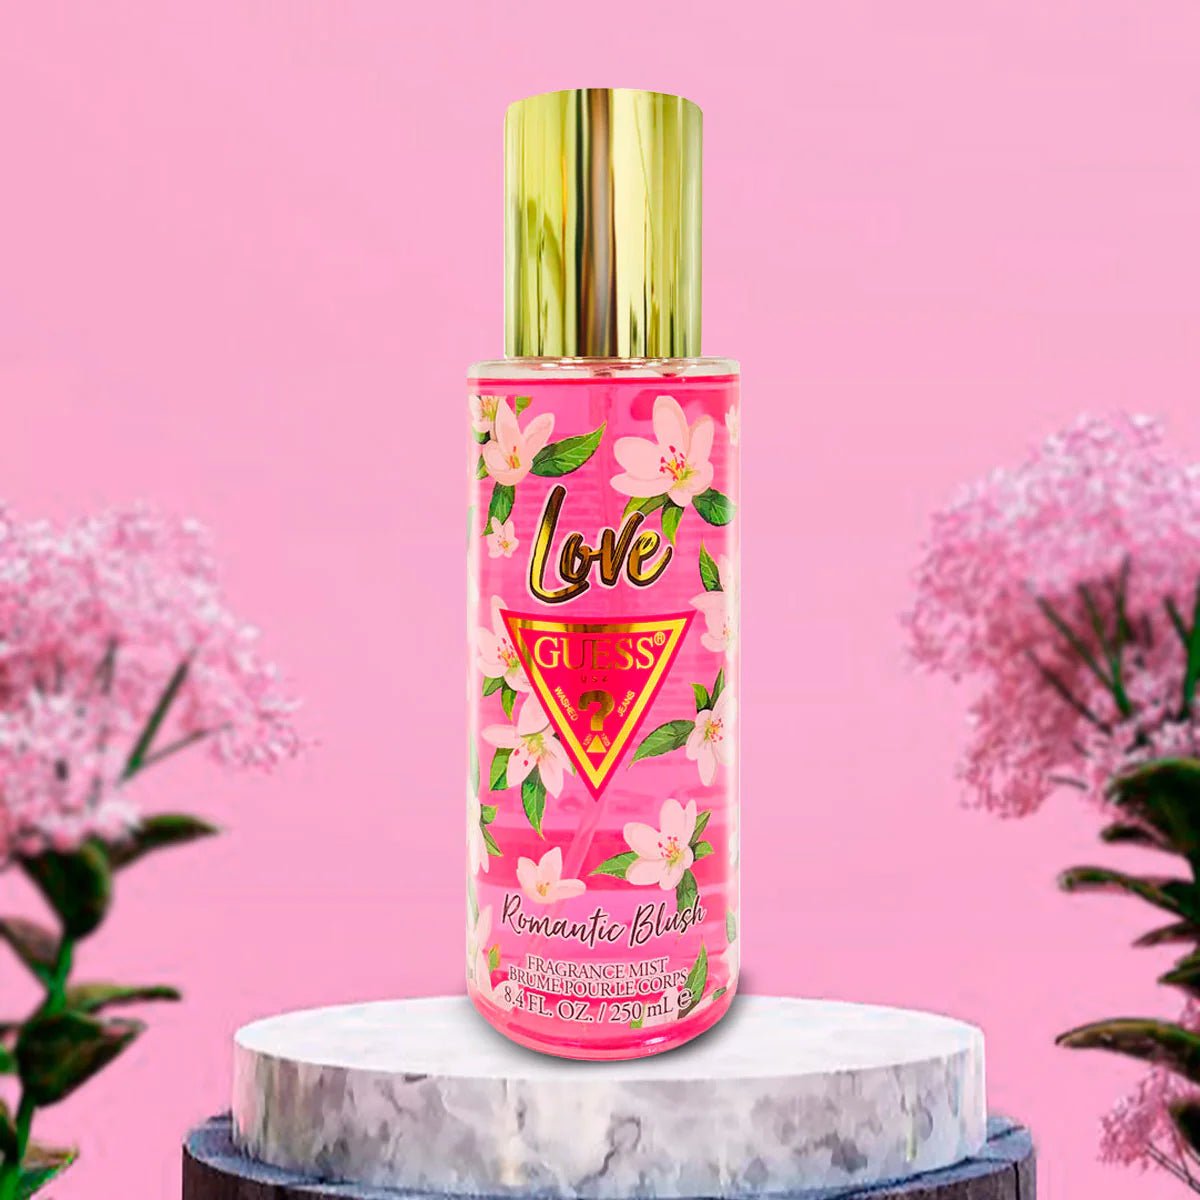 Guess Love Romantic Blush Body Mist | My Perfume Shop Australia